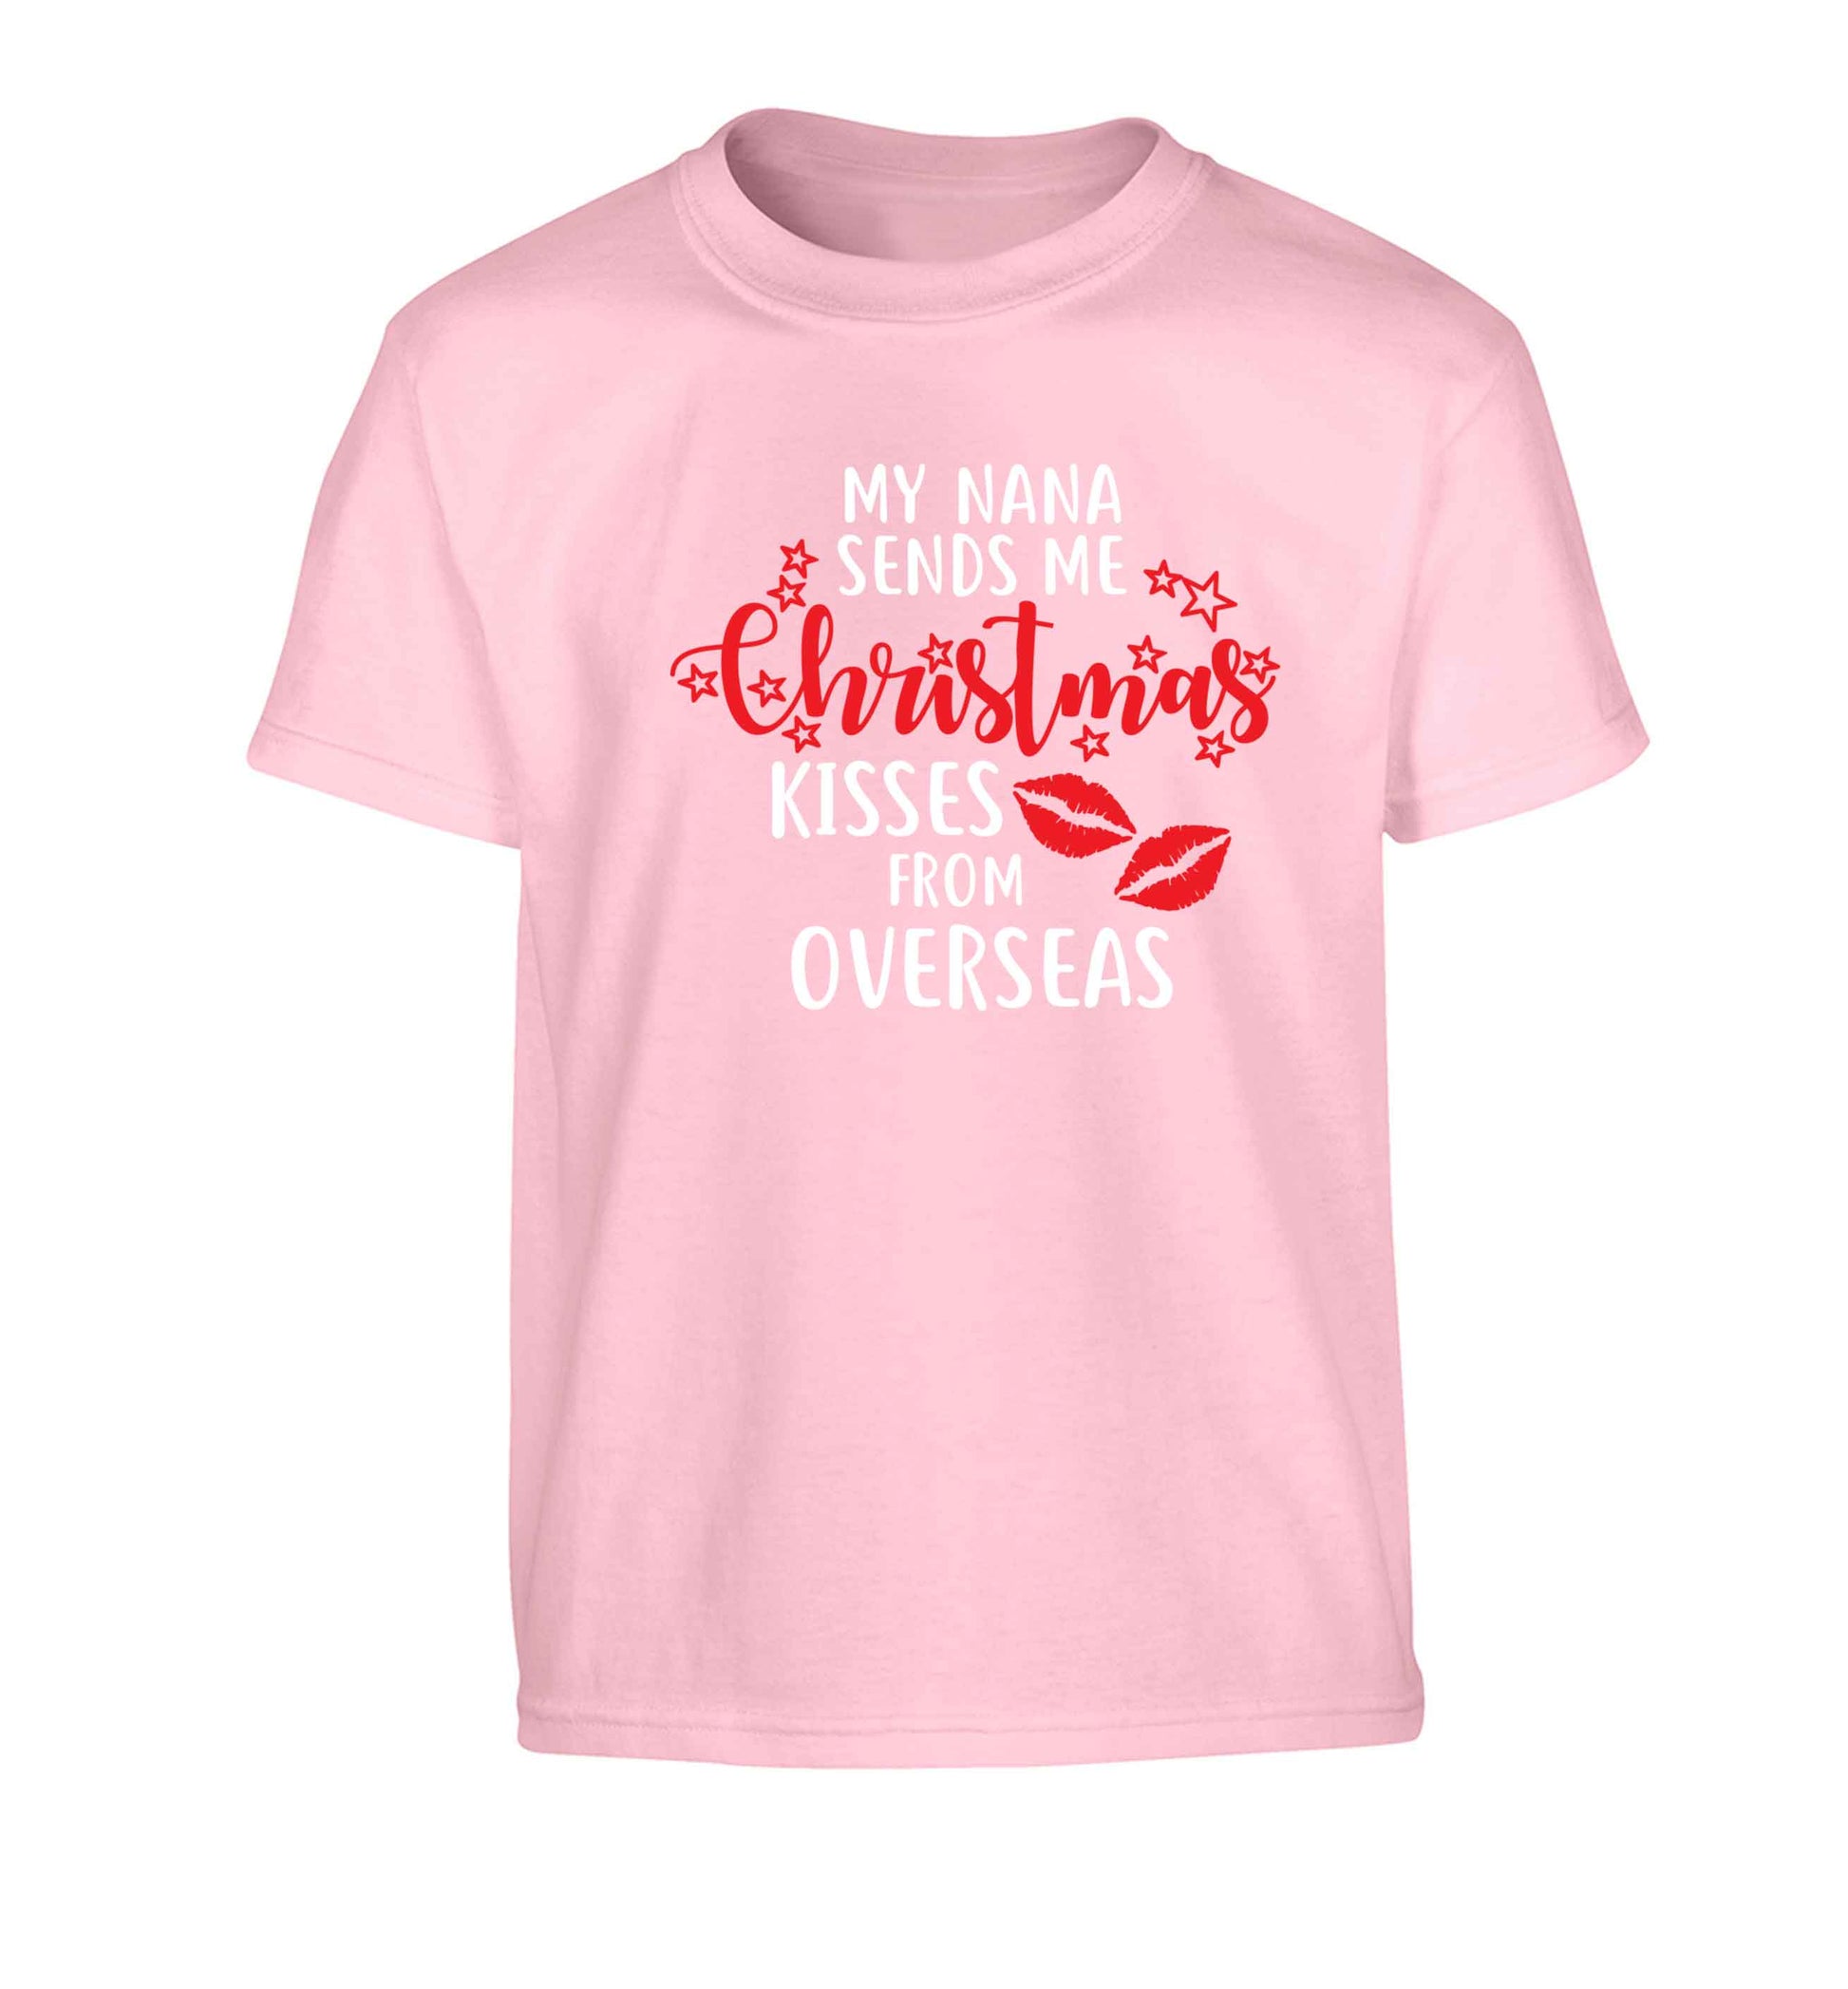 Grandma Christmas Kisses Overseas Children's light pink Tshirt 12-13 Years